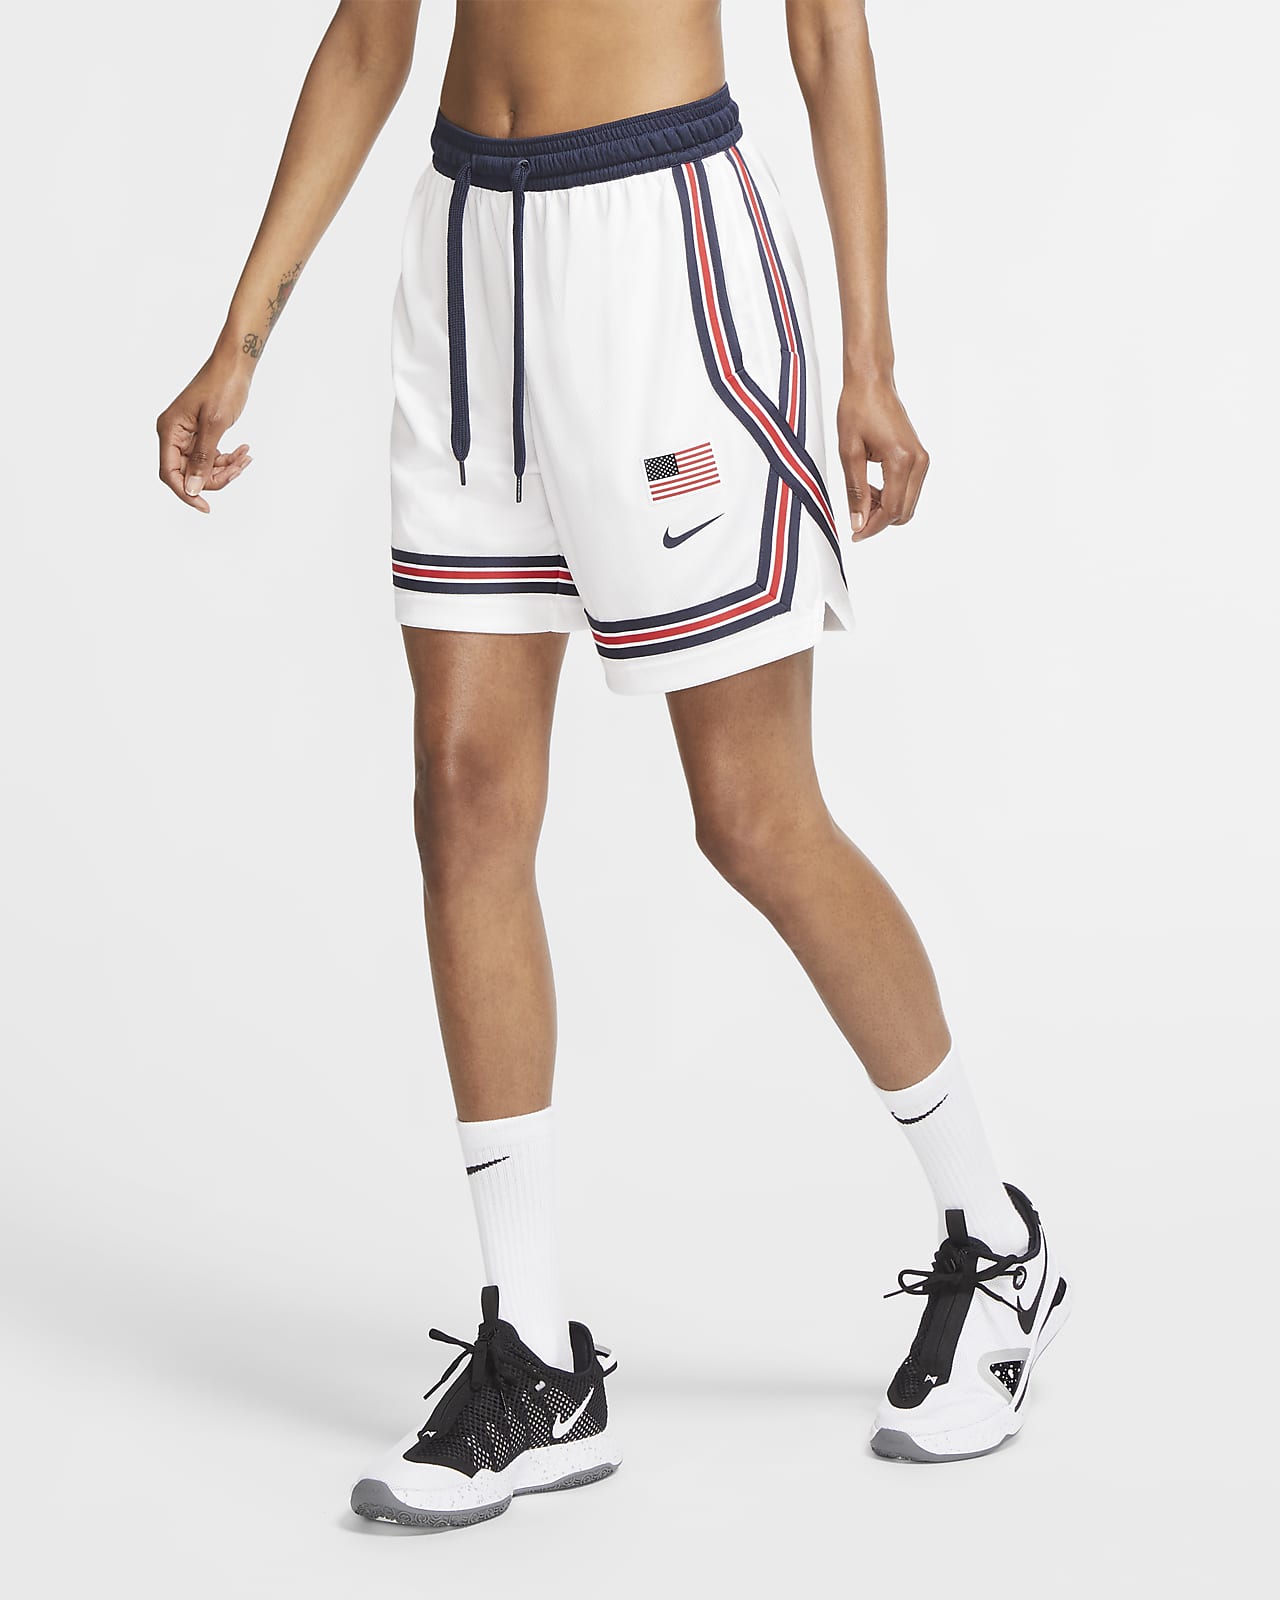 USA Women's Nike Basketball Shorts